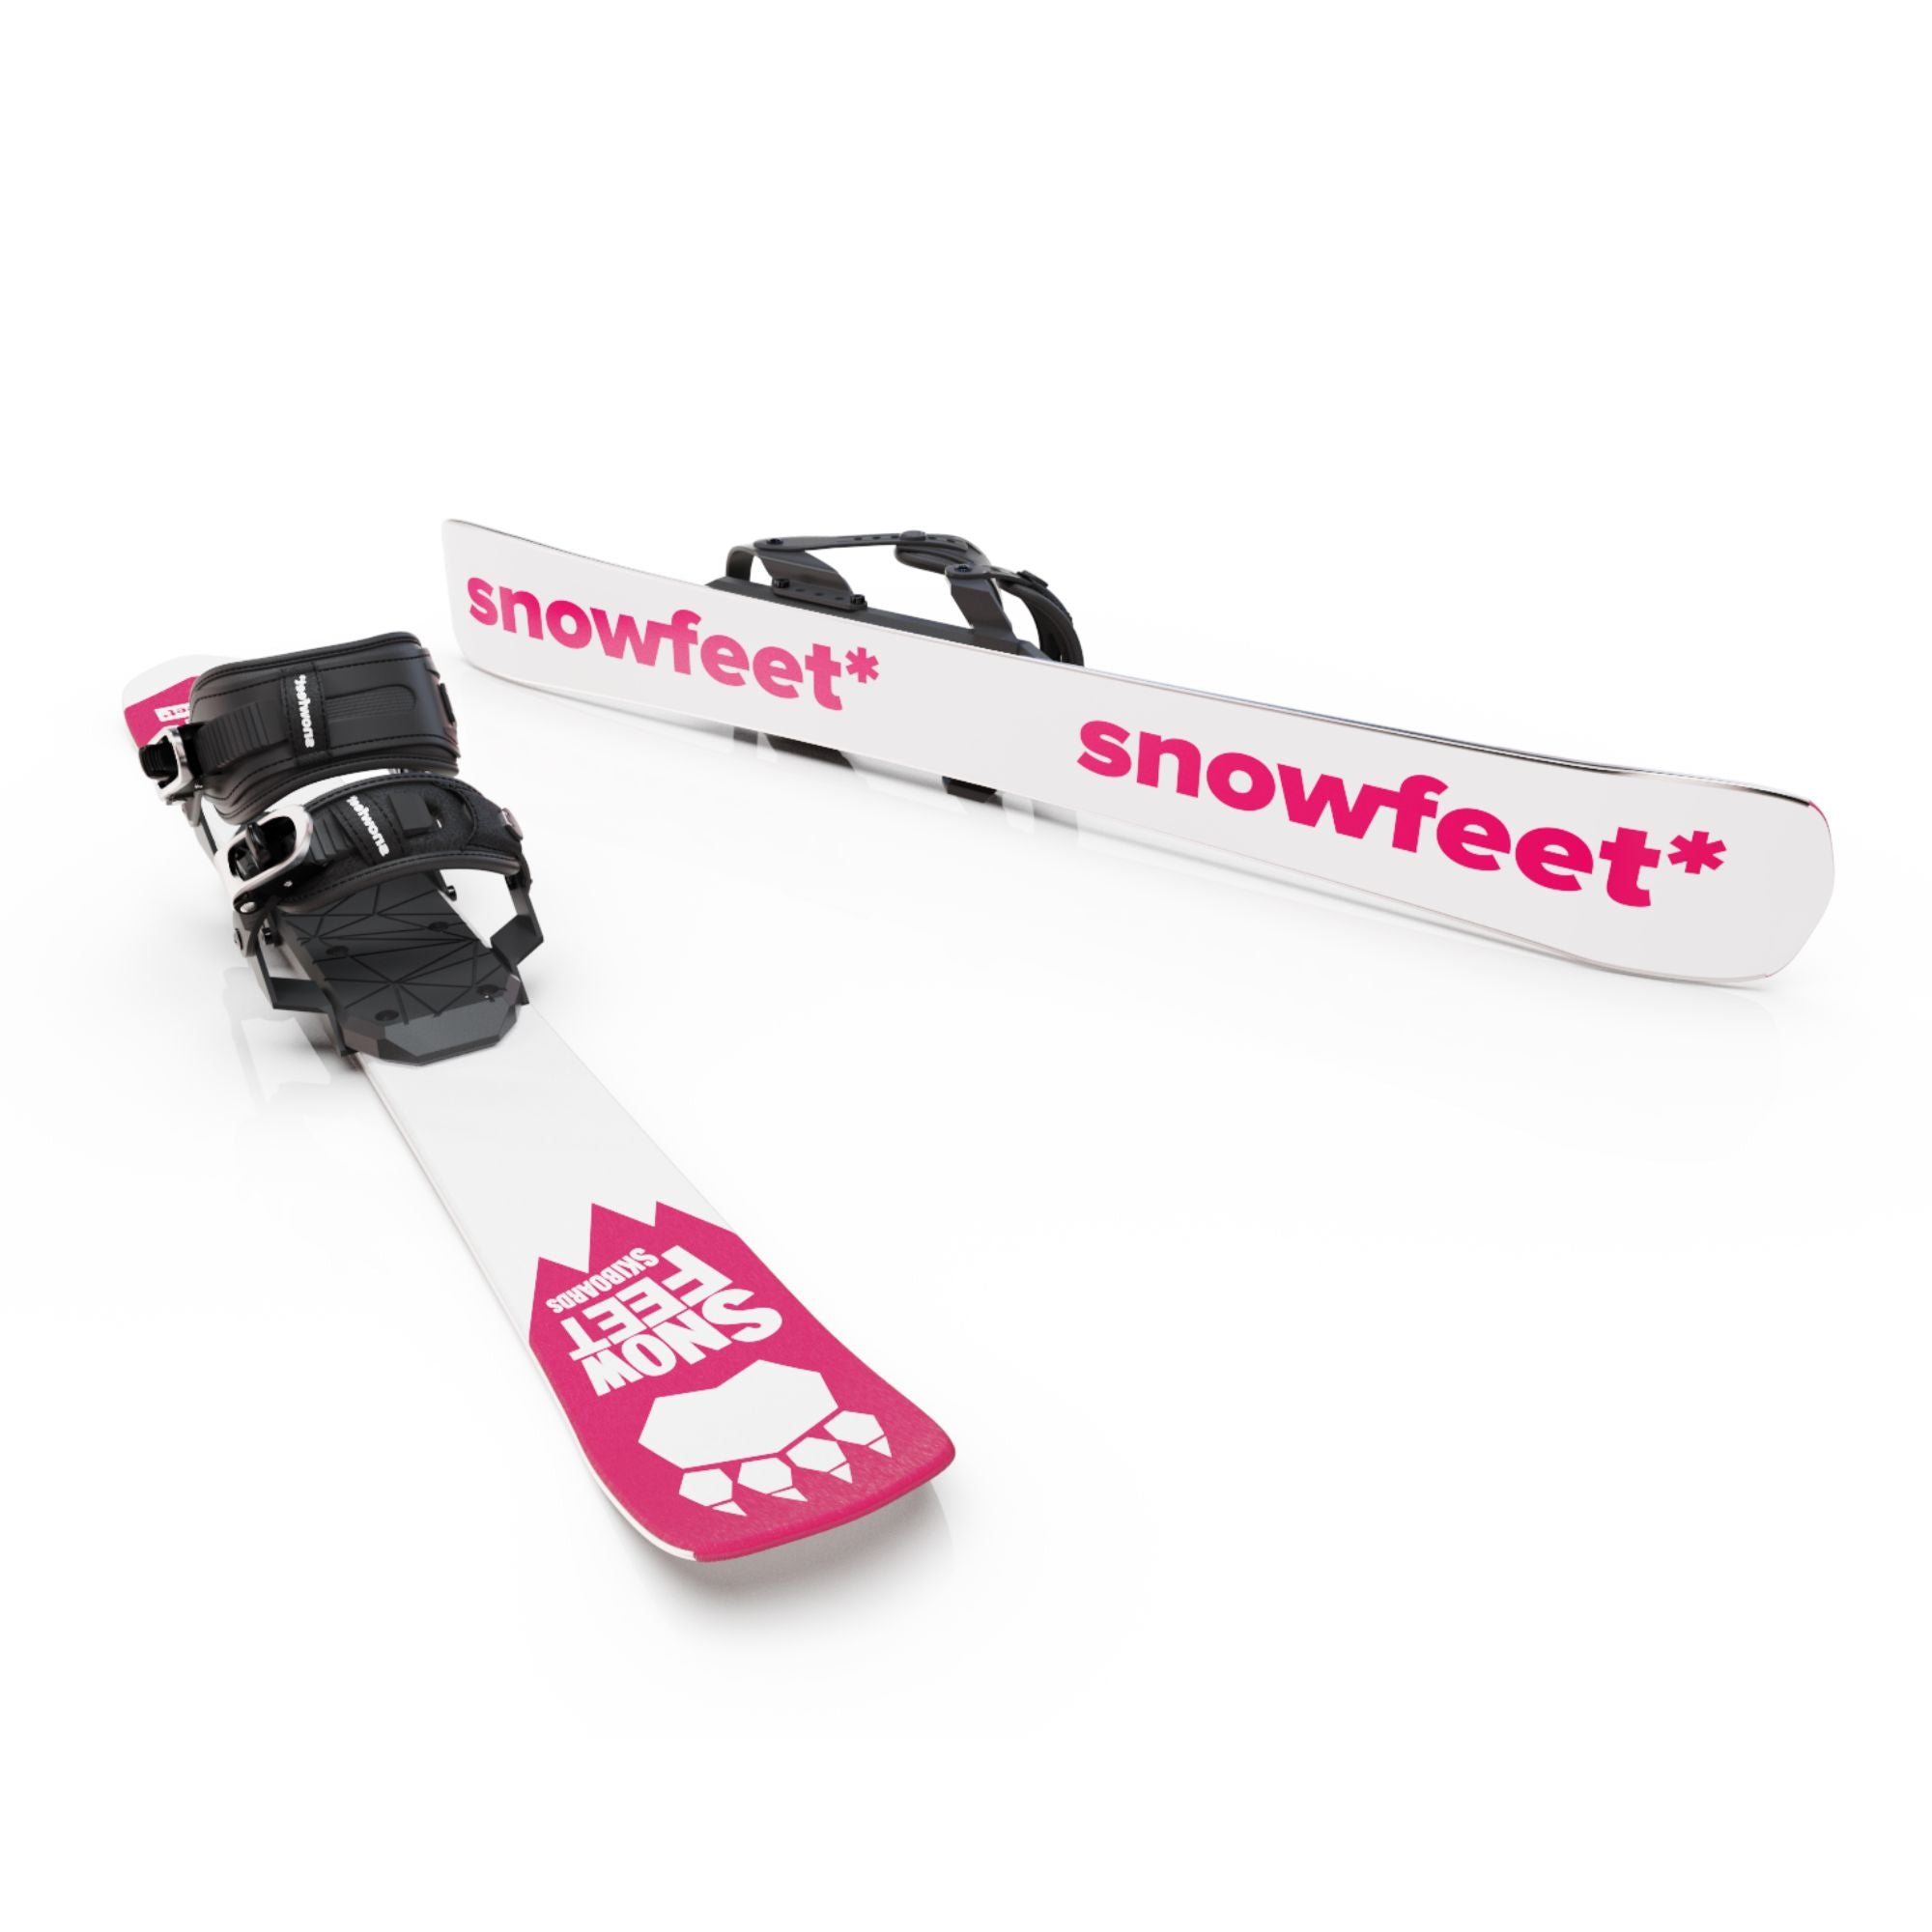 skiboards snowblades short ski 99 snowfeet mini little ski skiblades for snowboard boot with snowboard boot bindings pink